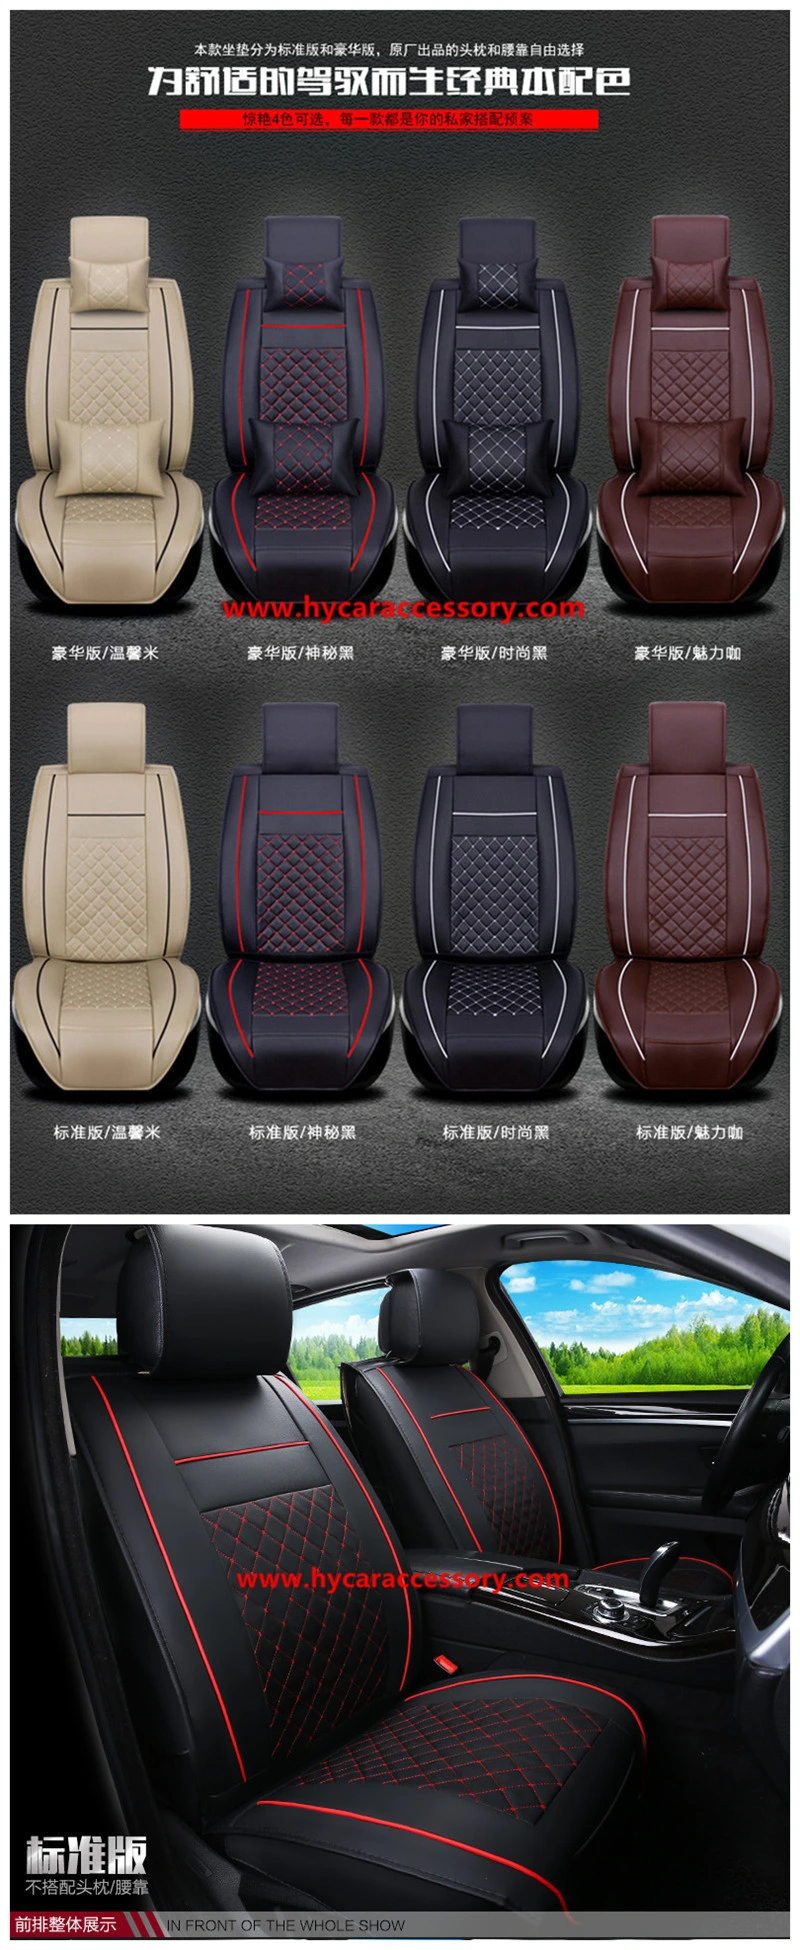 Car Accessory Car Decoration Cushion Universal Cartoon Coffee Color Pure Leather Auto Car Seat Cover